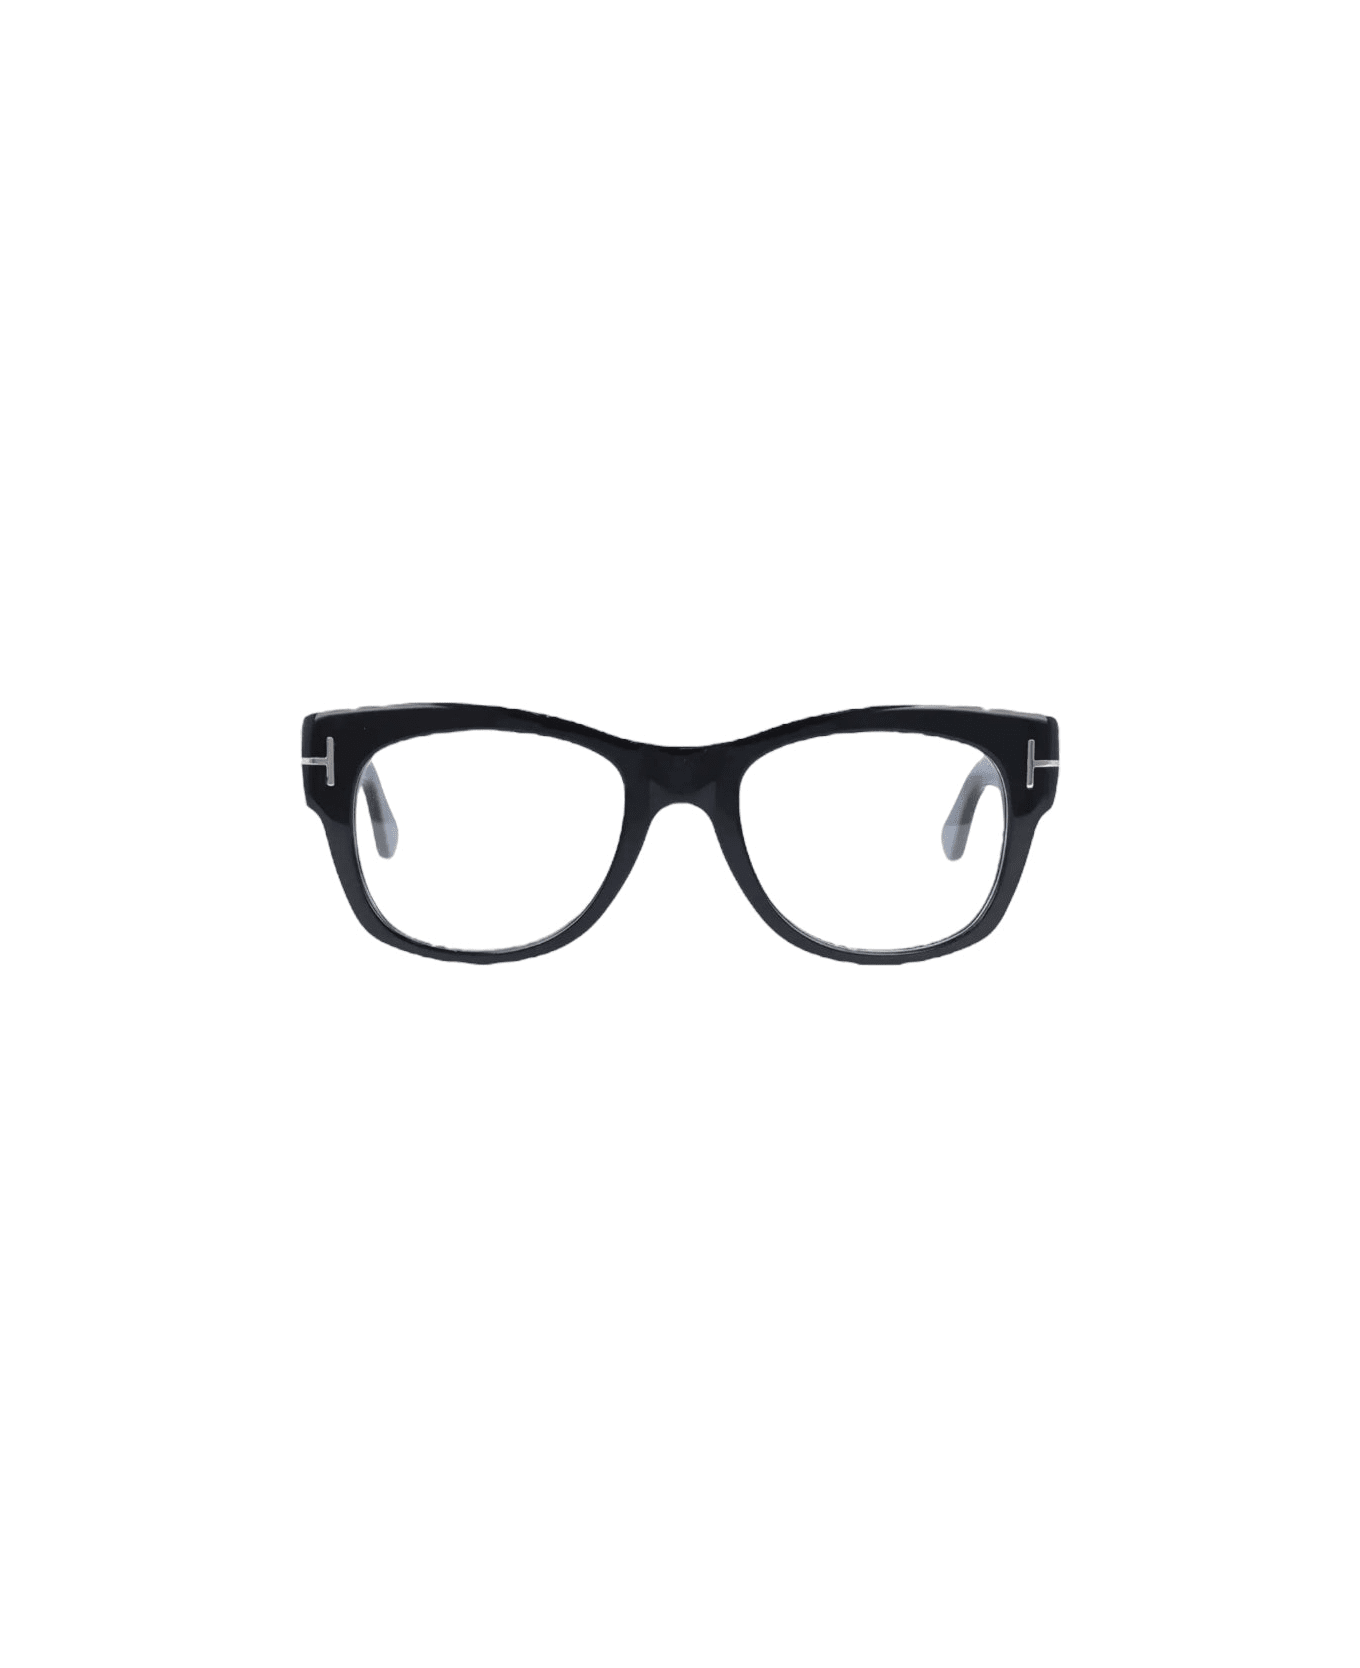 Tom Ford Eyewear Tf 5040 - Black Glasses